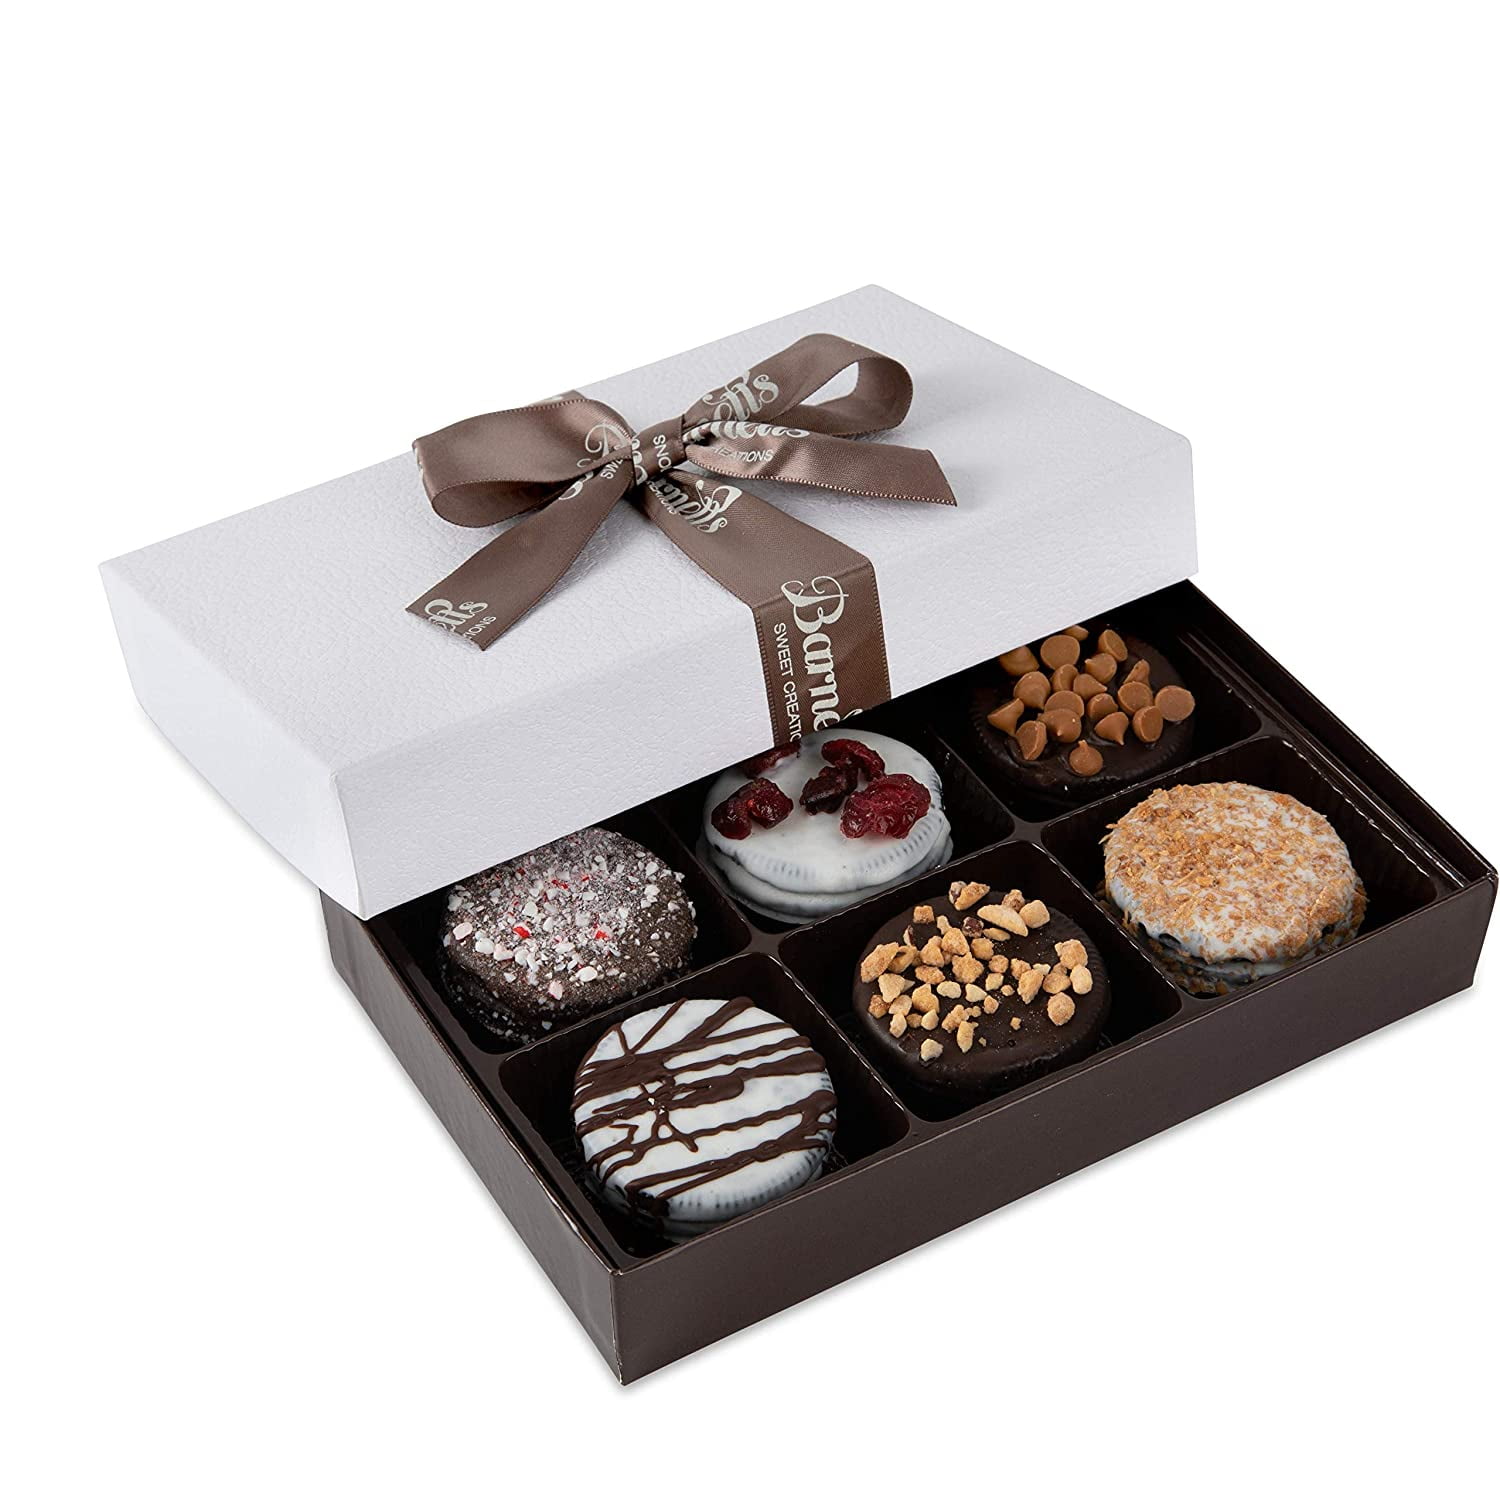 Barnett's Chocolate Cookies Favors Gift Box Sampler, Gourmet Christmas